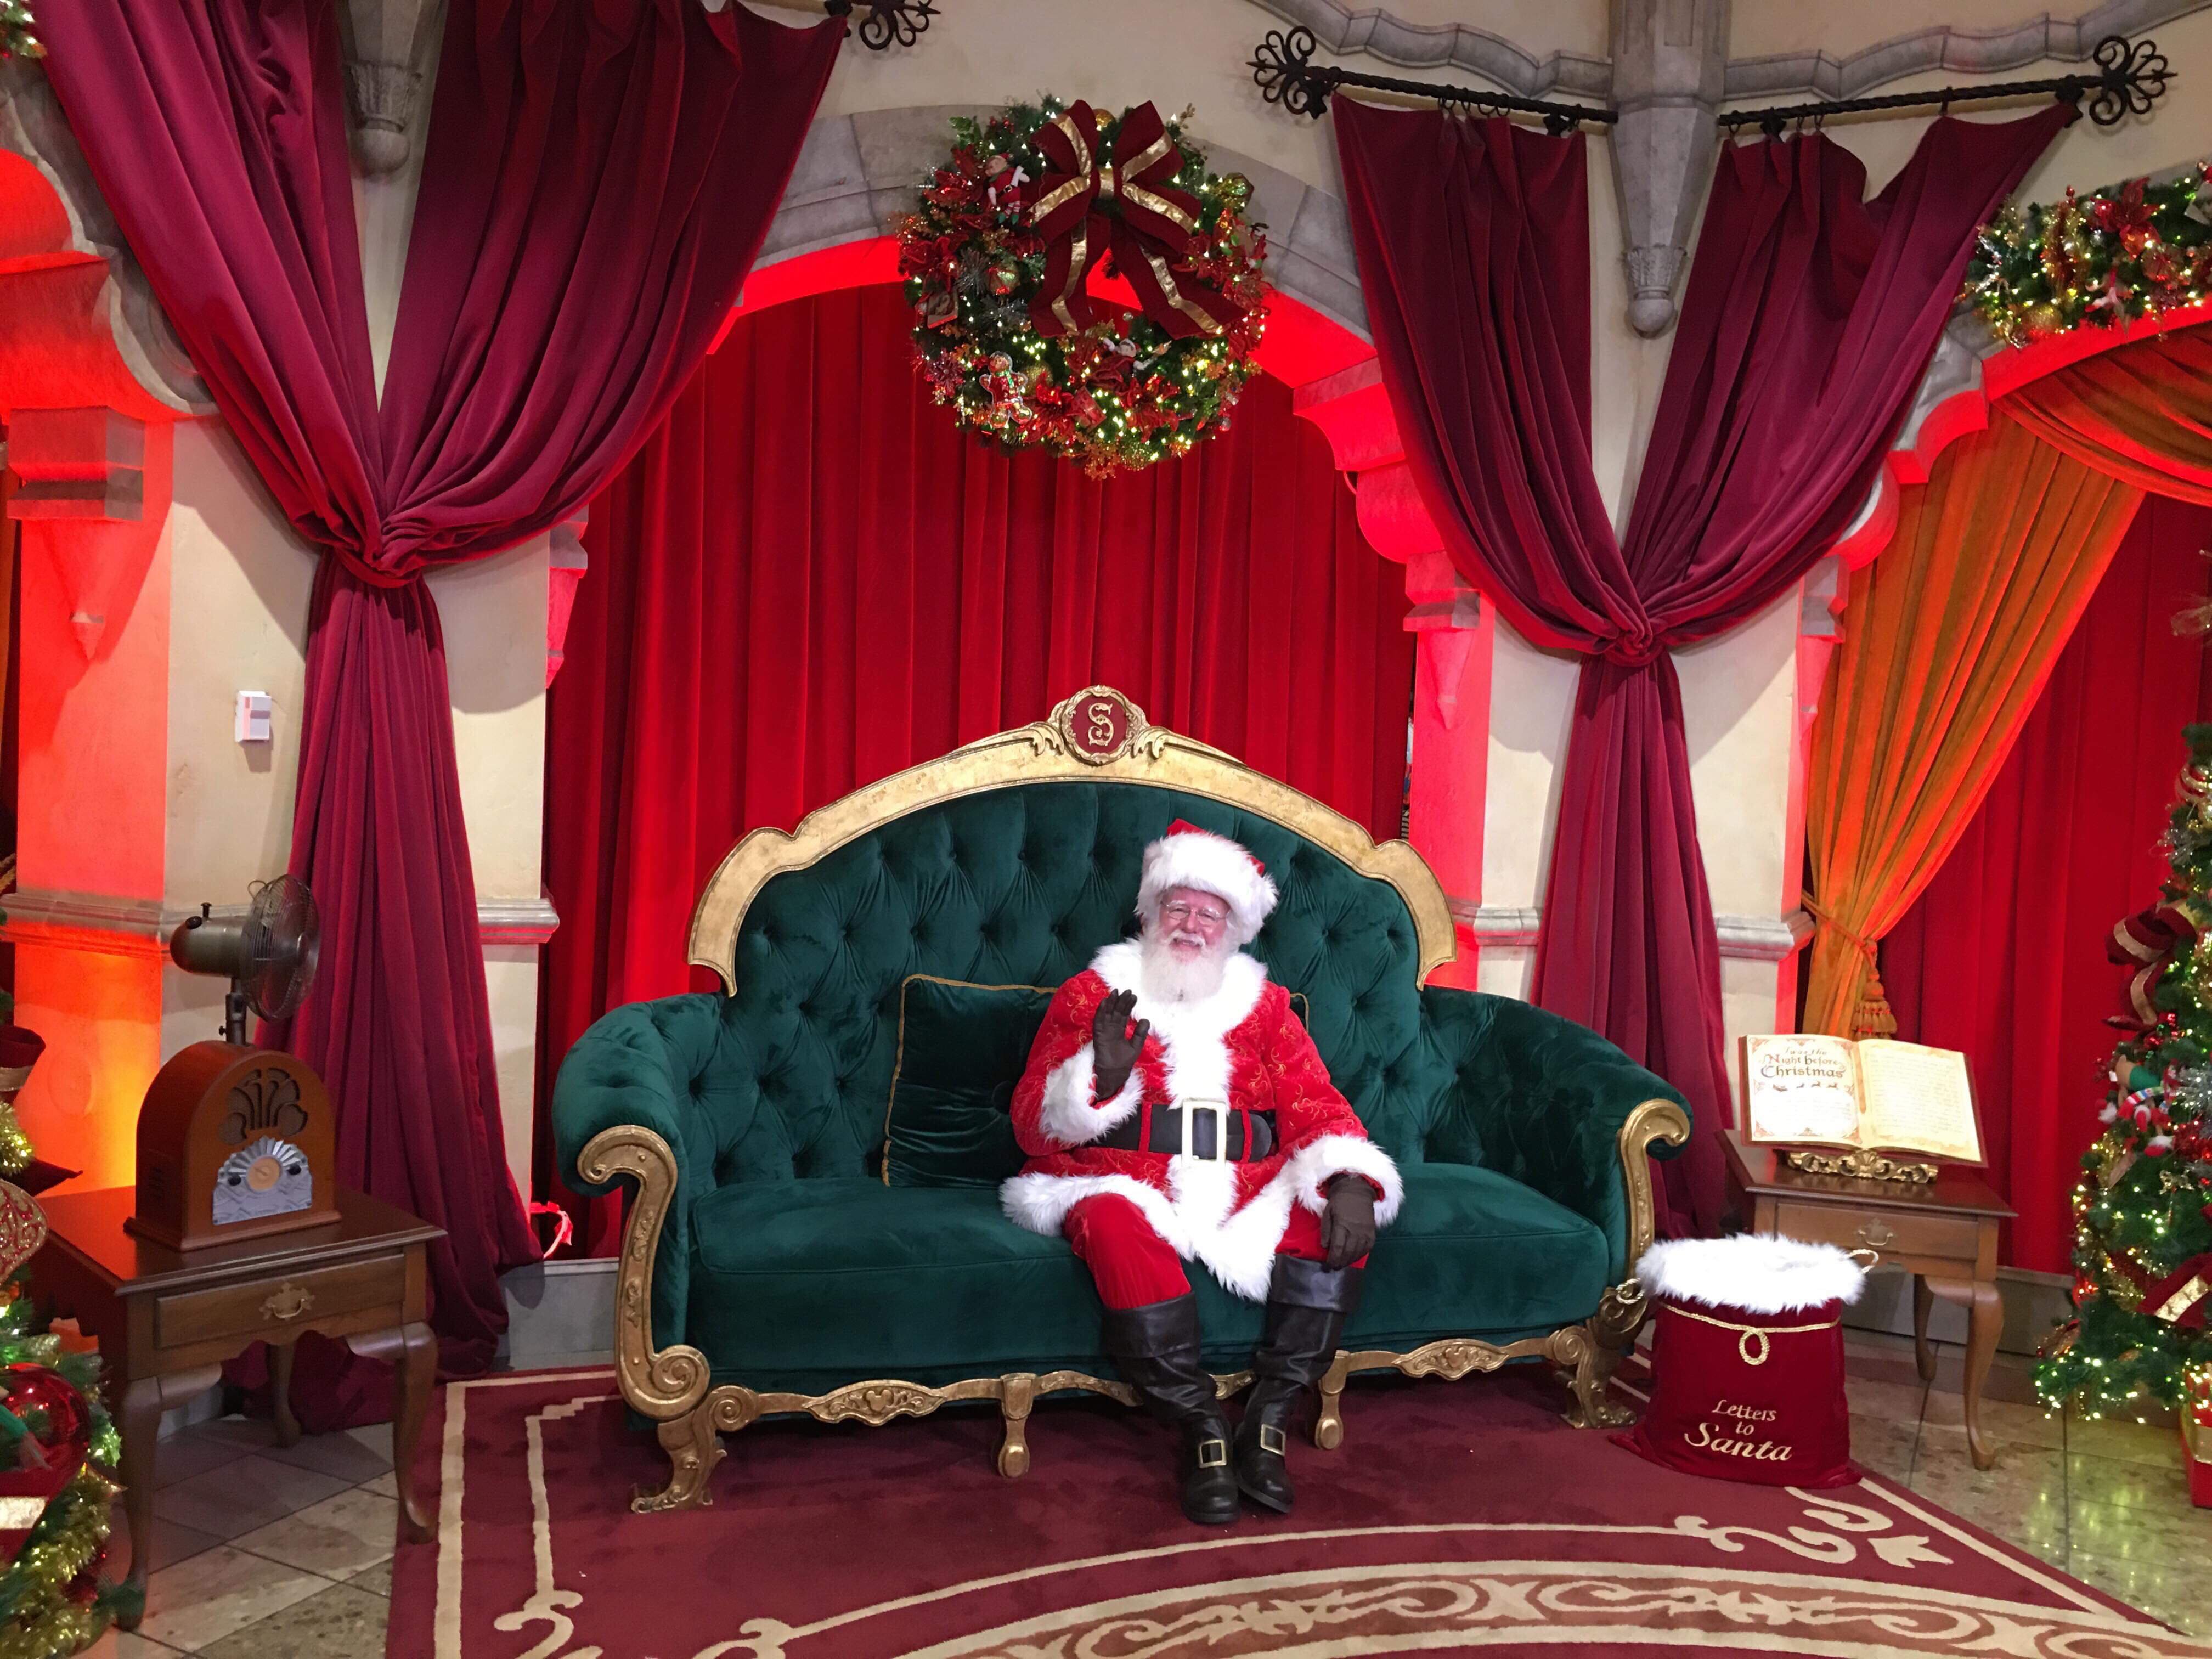 Meet Santa at Disney’s Hollywood Studios